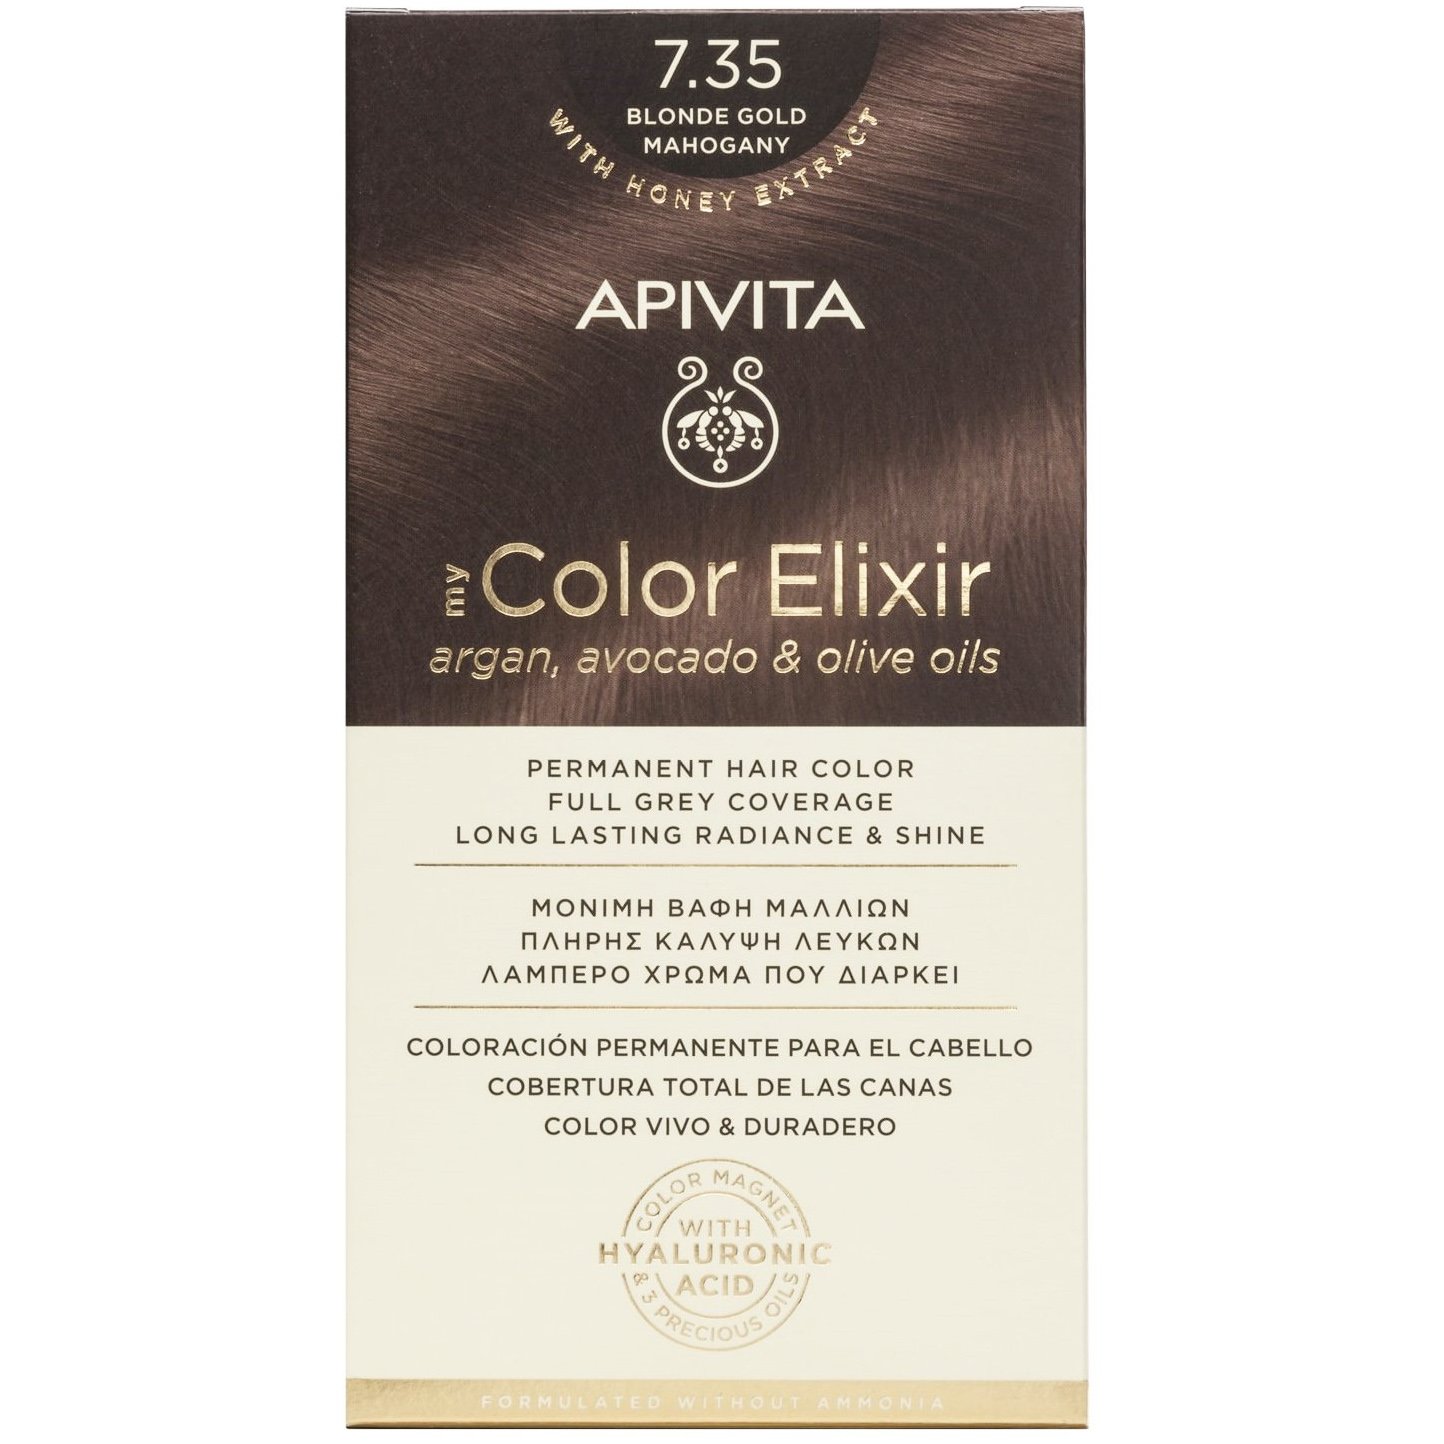 Apivita Promo My Color Elixir Permanent Hair Color Μόνιμη Βαφή Μαλλιών για Λαμπερό Χρώμα που Διαρκεί – 7.35 Ξανθό Μελί Μαονί